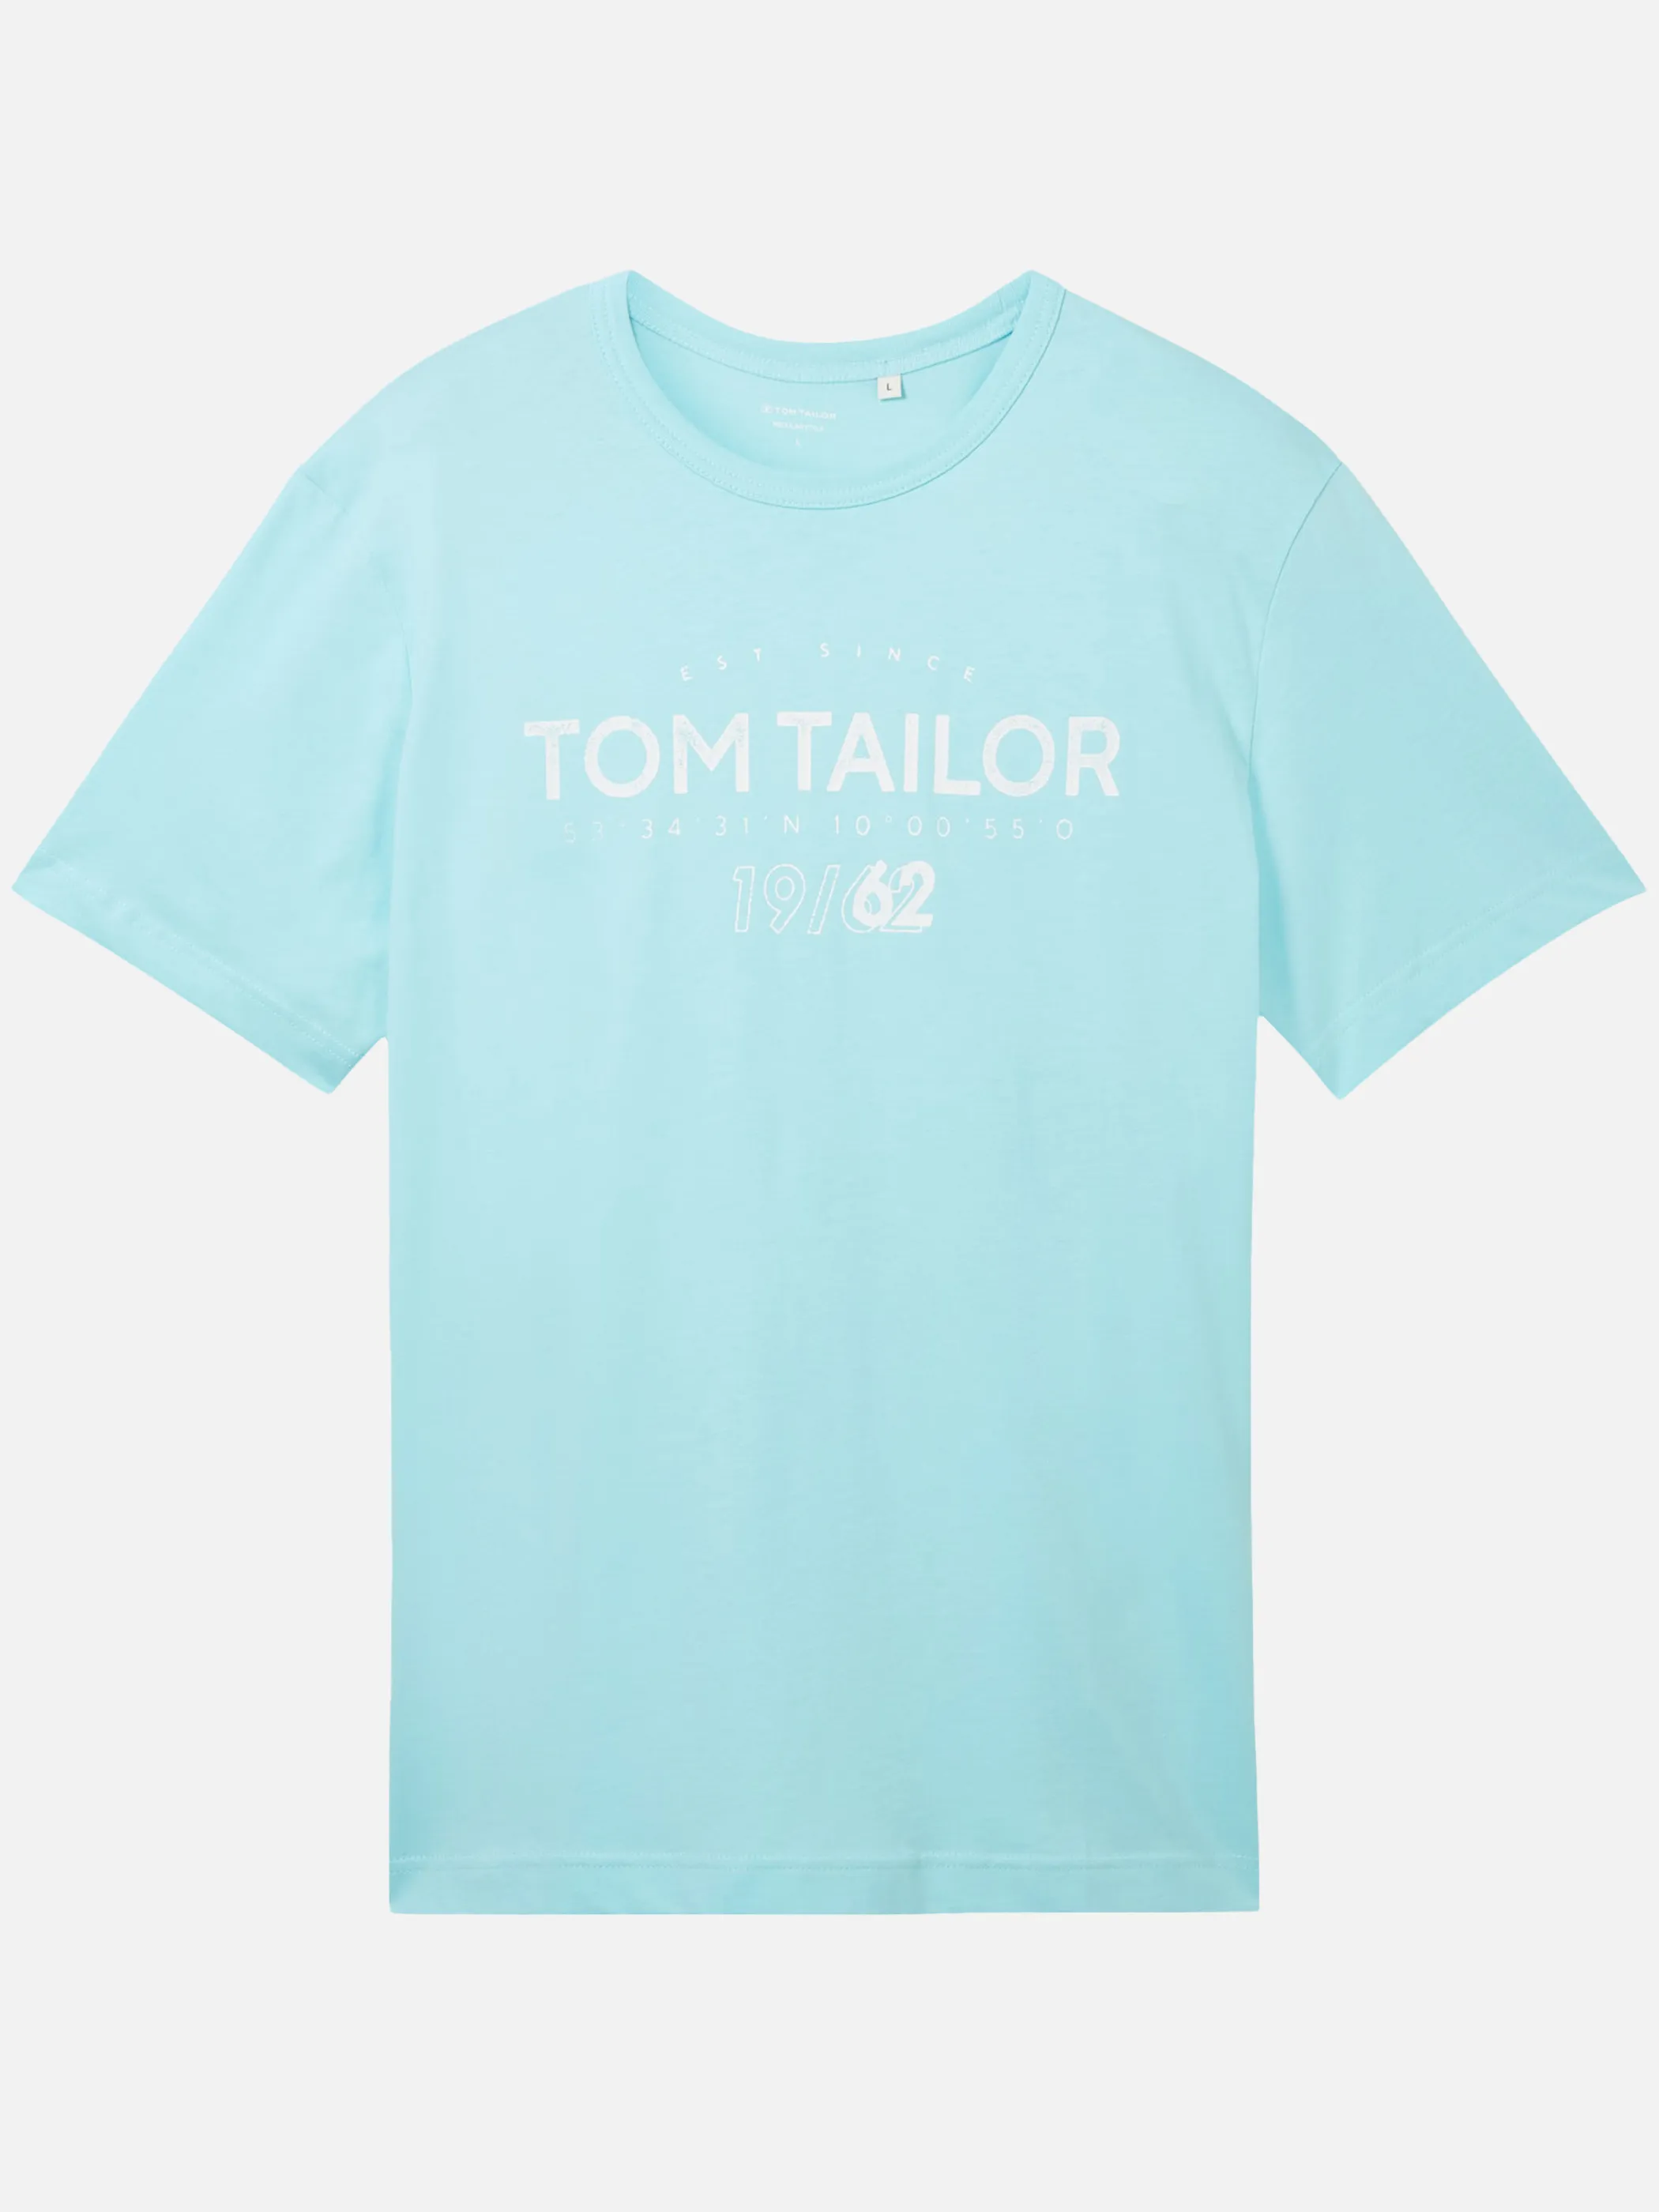 Tom Tailor 1041871 printed t-shirt Türkis 895641 34921 1